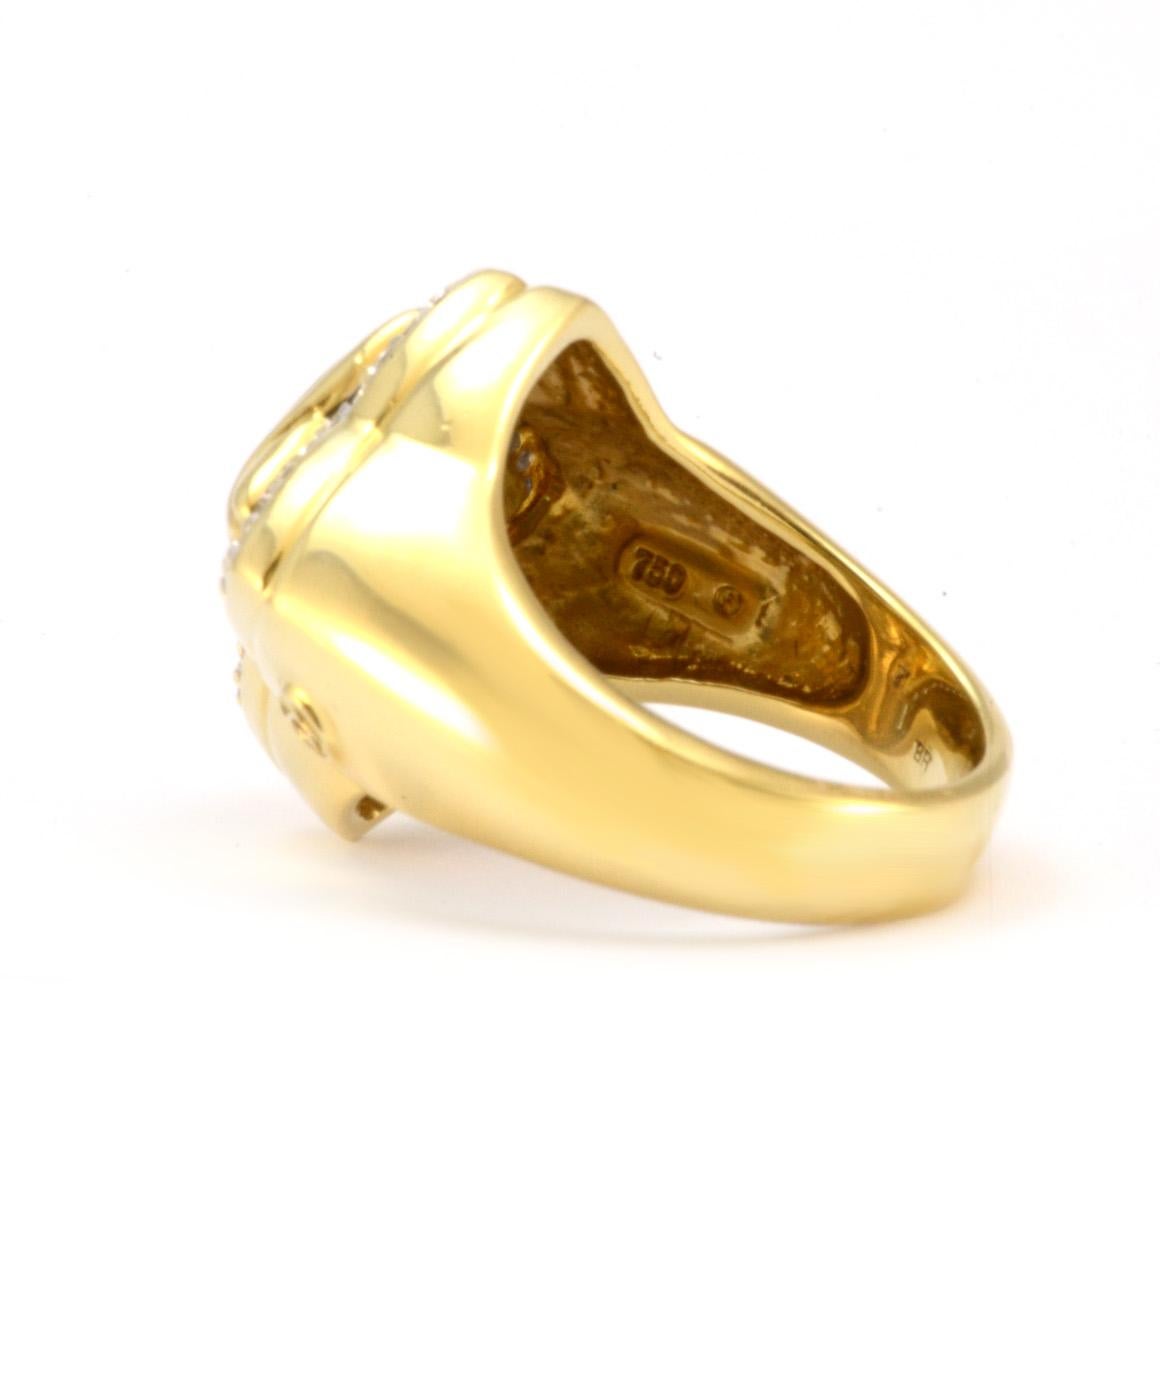 100% Authentic David Yurman 18 Karat Yellow Gold Natural Diamond Ring 2